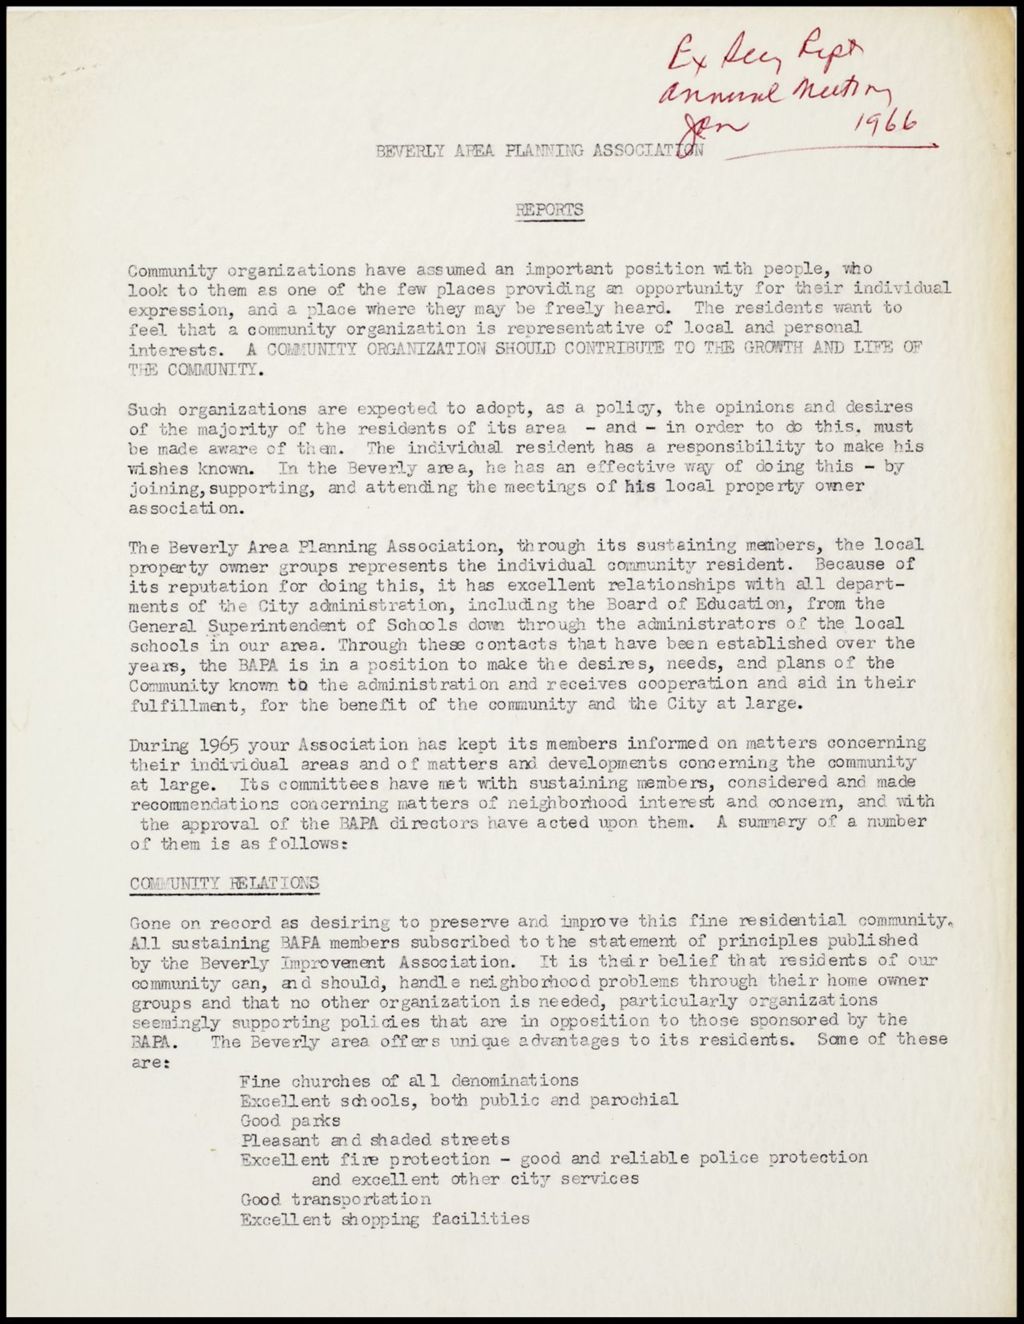 Miniature of Executive Secretary's reports, 1966 (Folder 101)